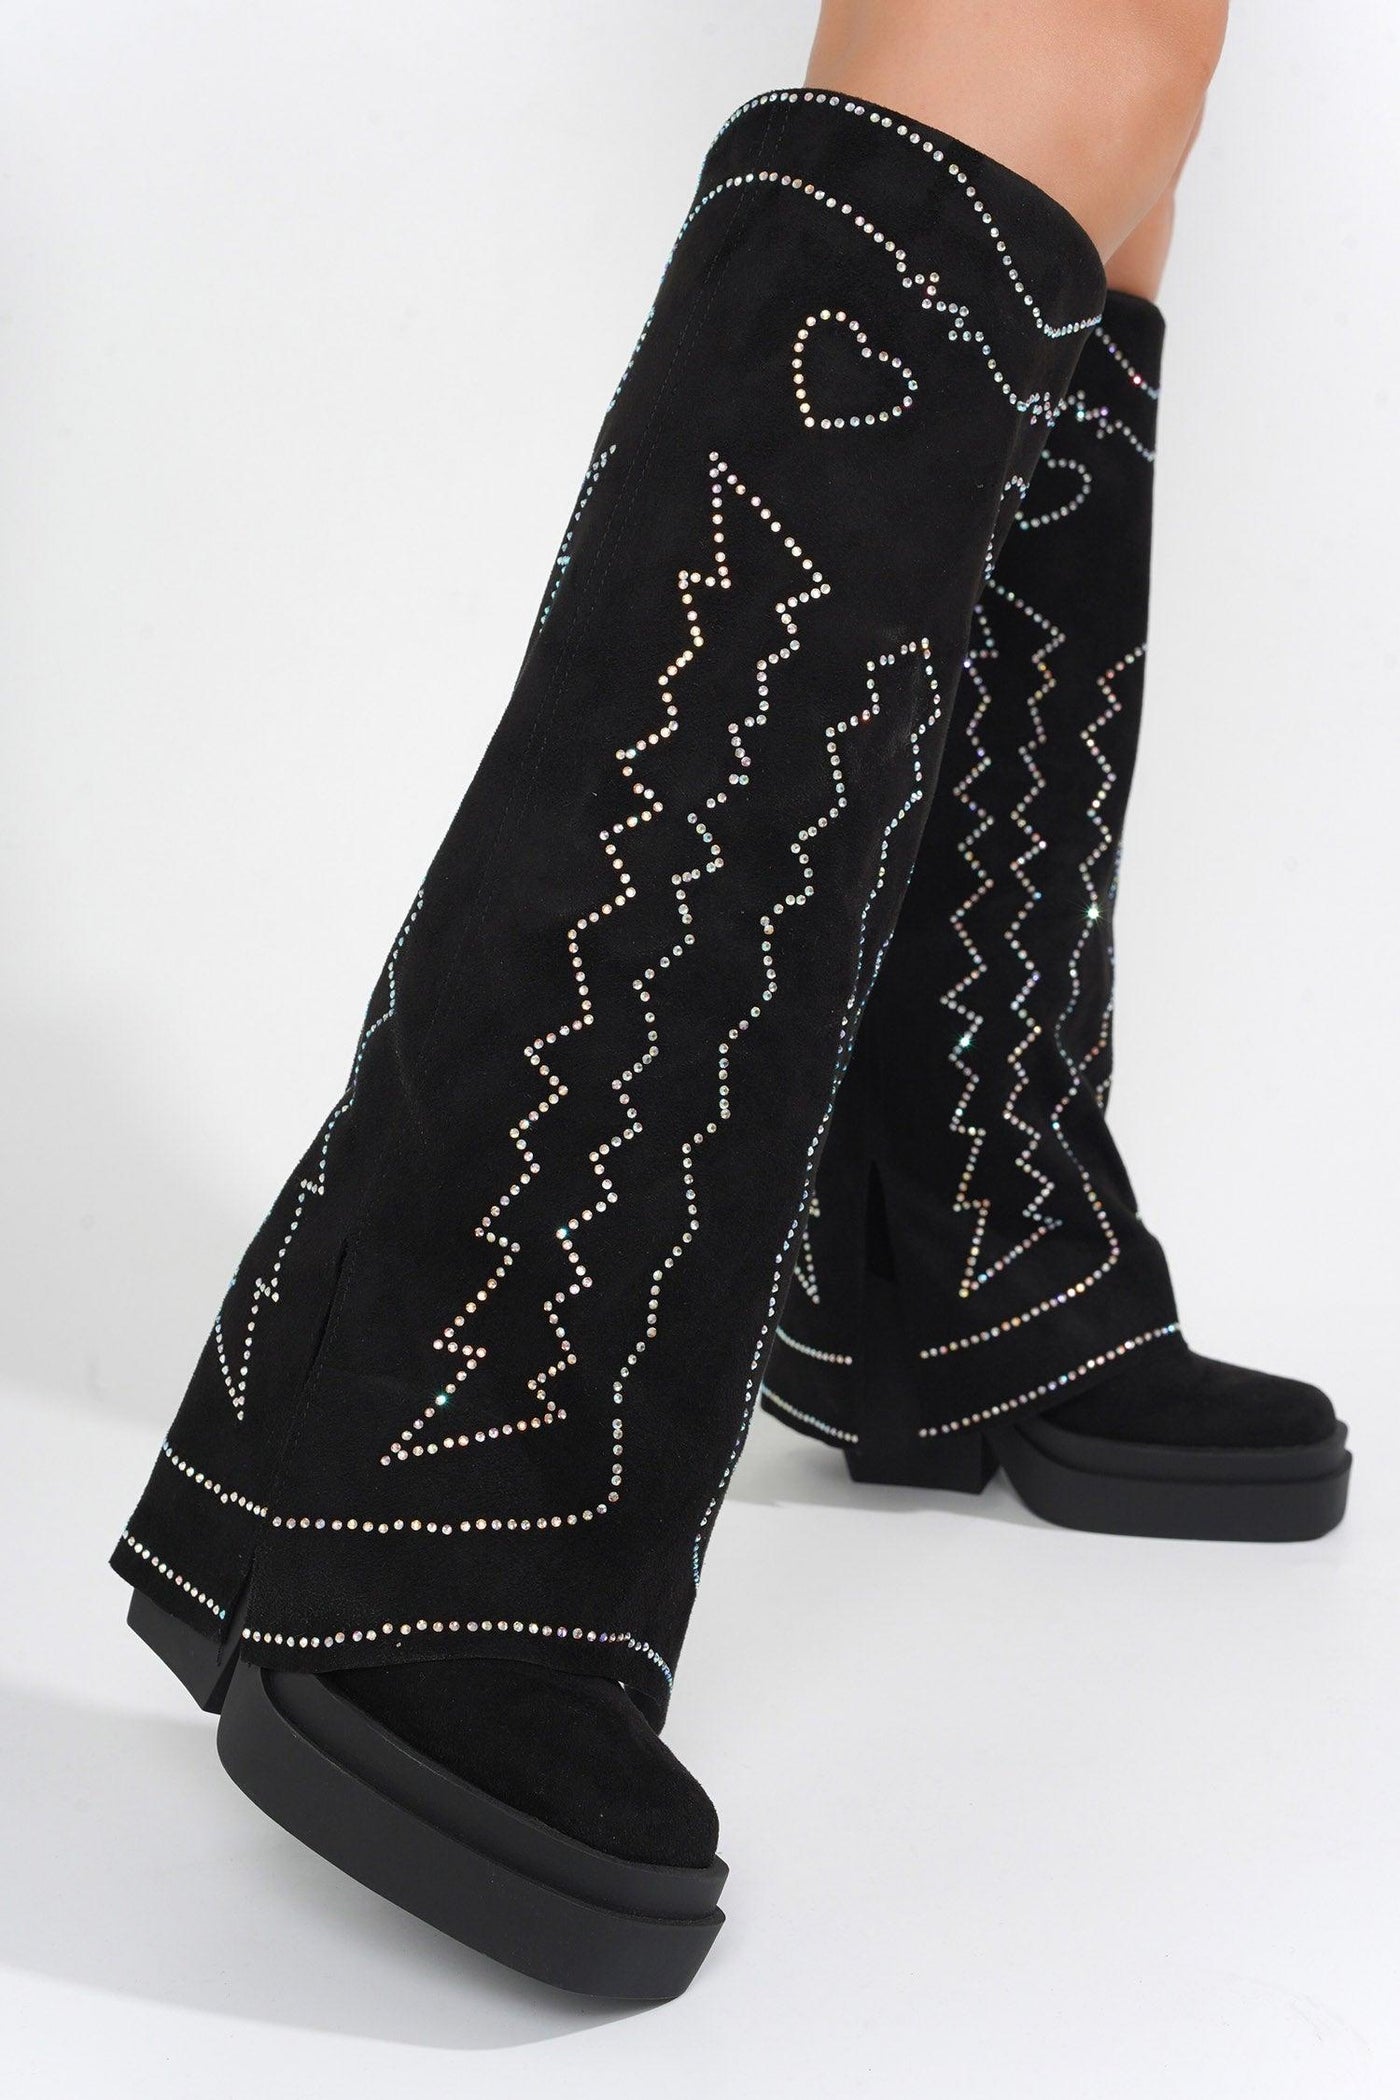 LUVO - BLACK Thigh High Boots - AMIClubwear